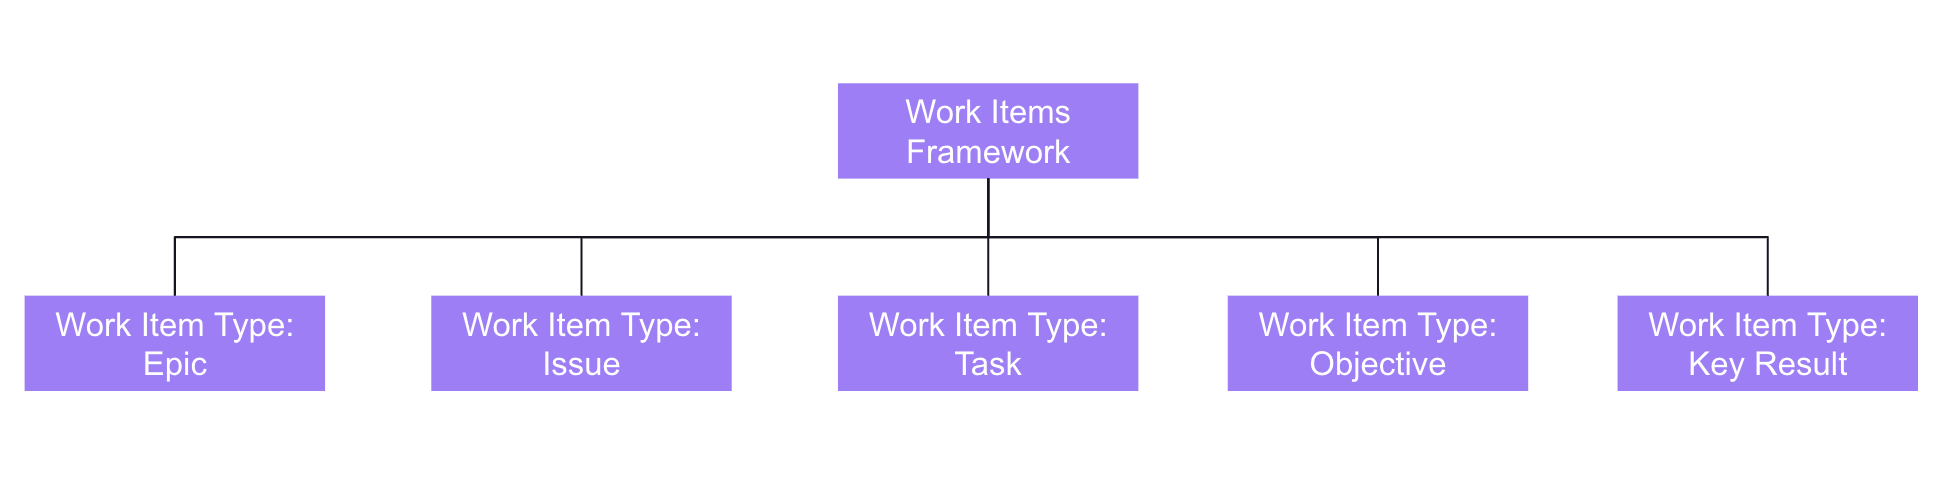 Work Items framework